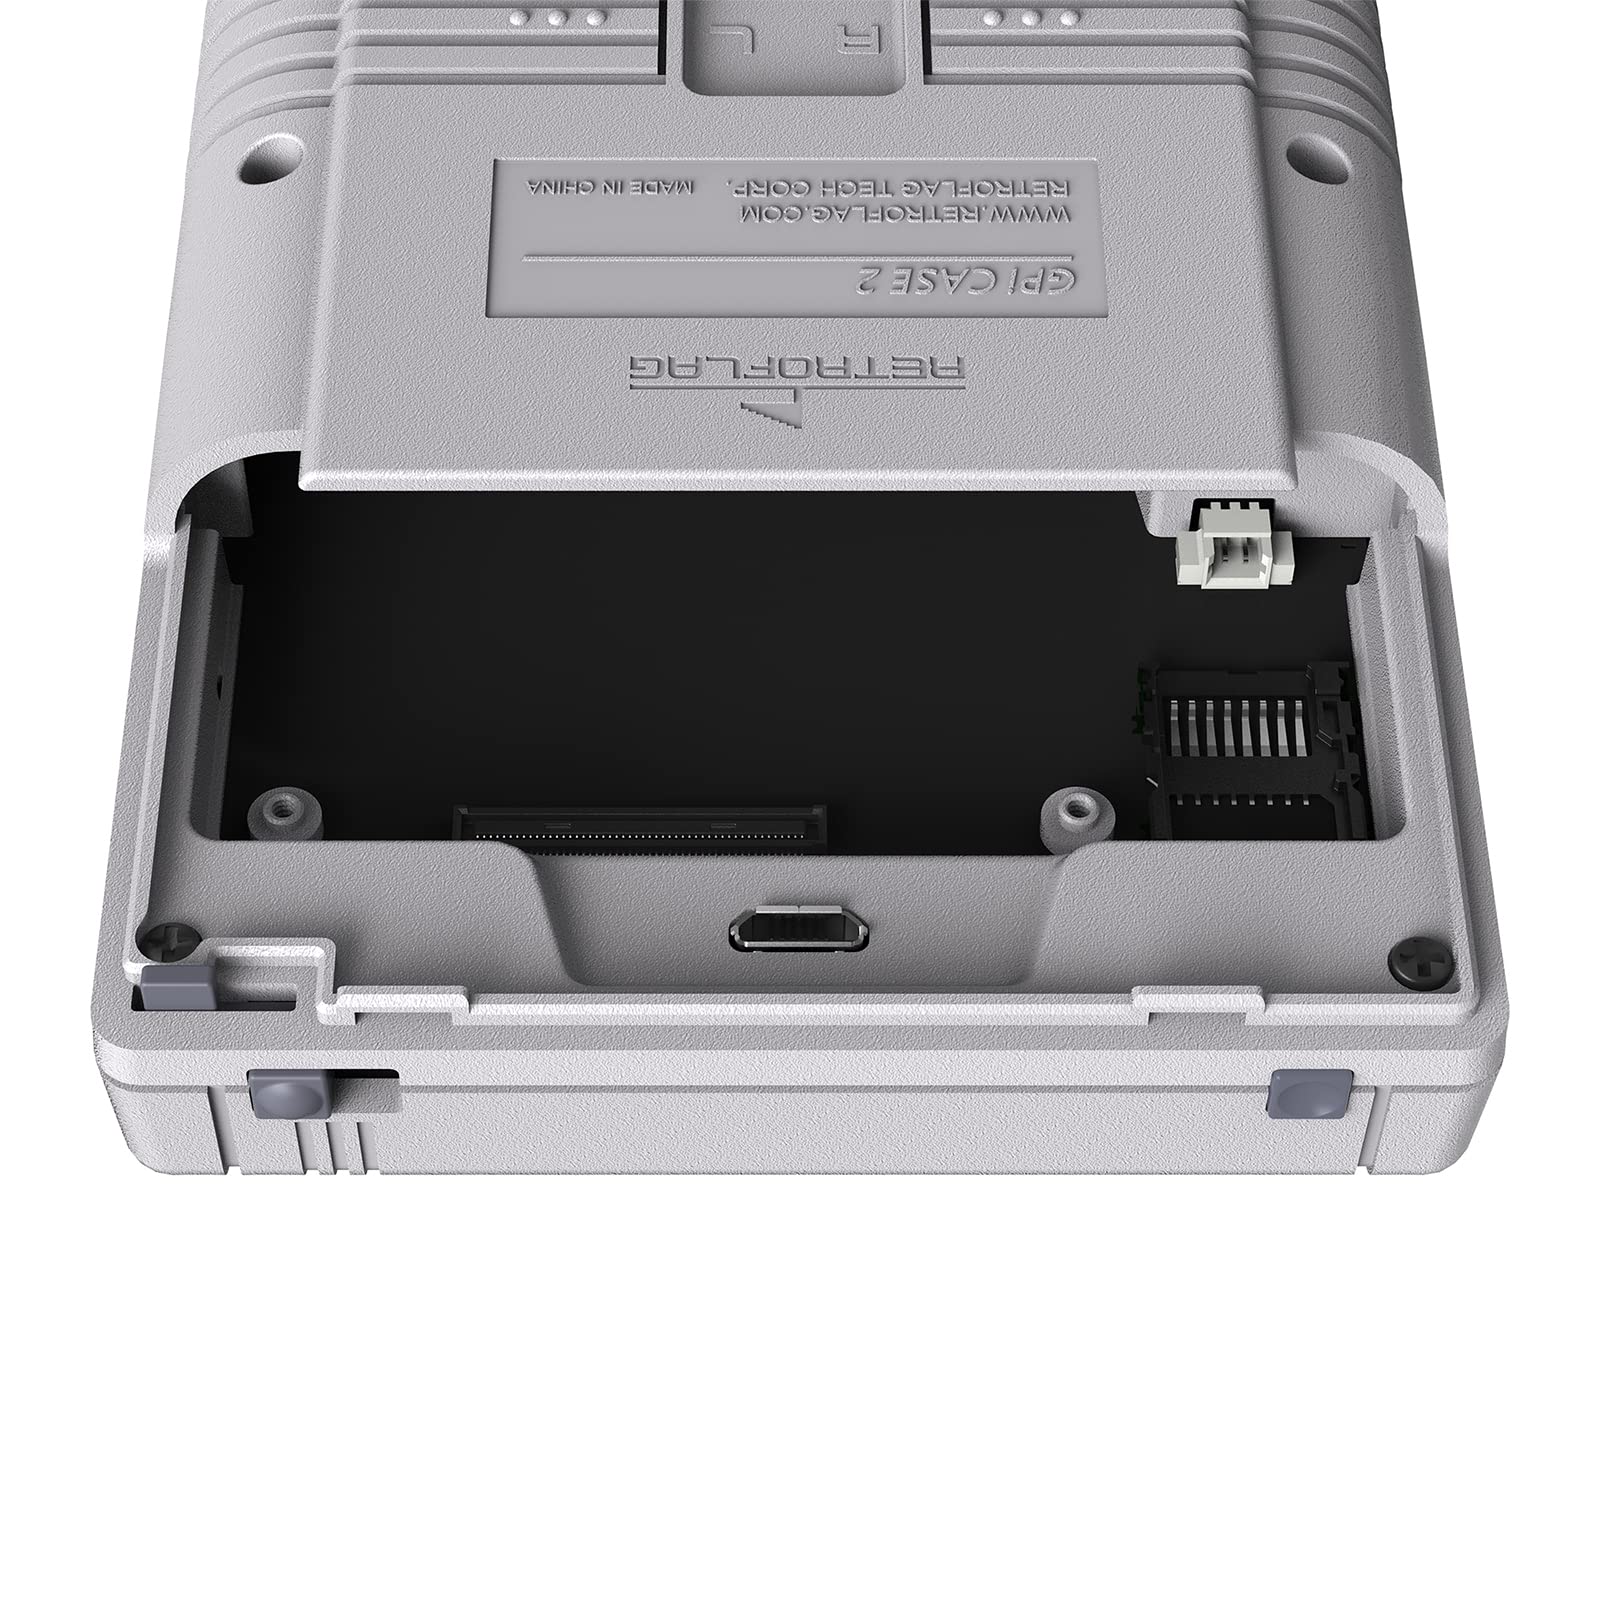 RetroFlag GPi Case 2 CM4 Handheld Review : r/SBCGaming